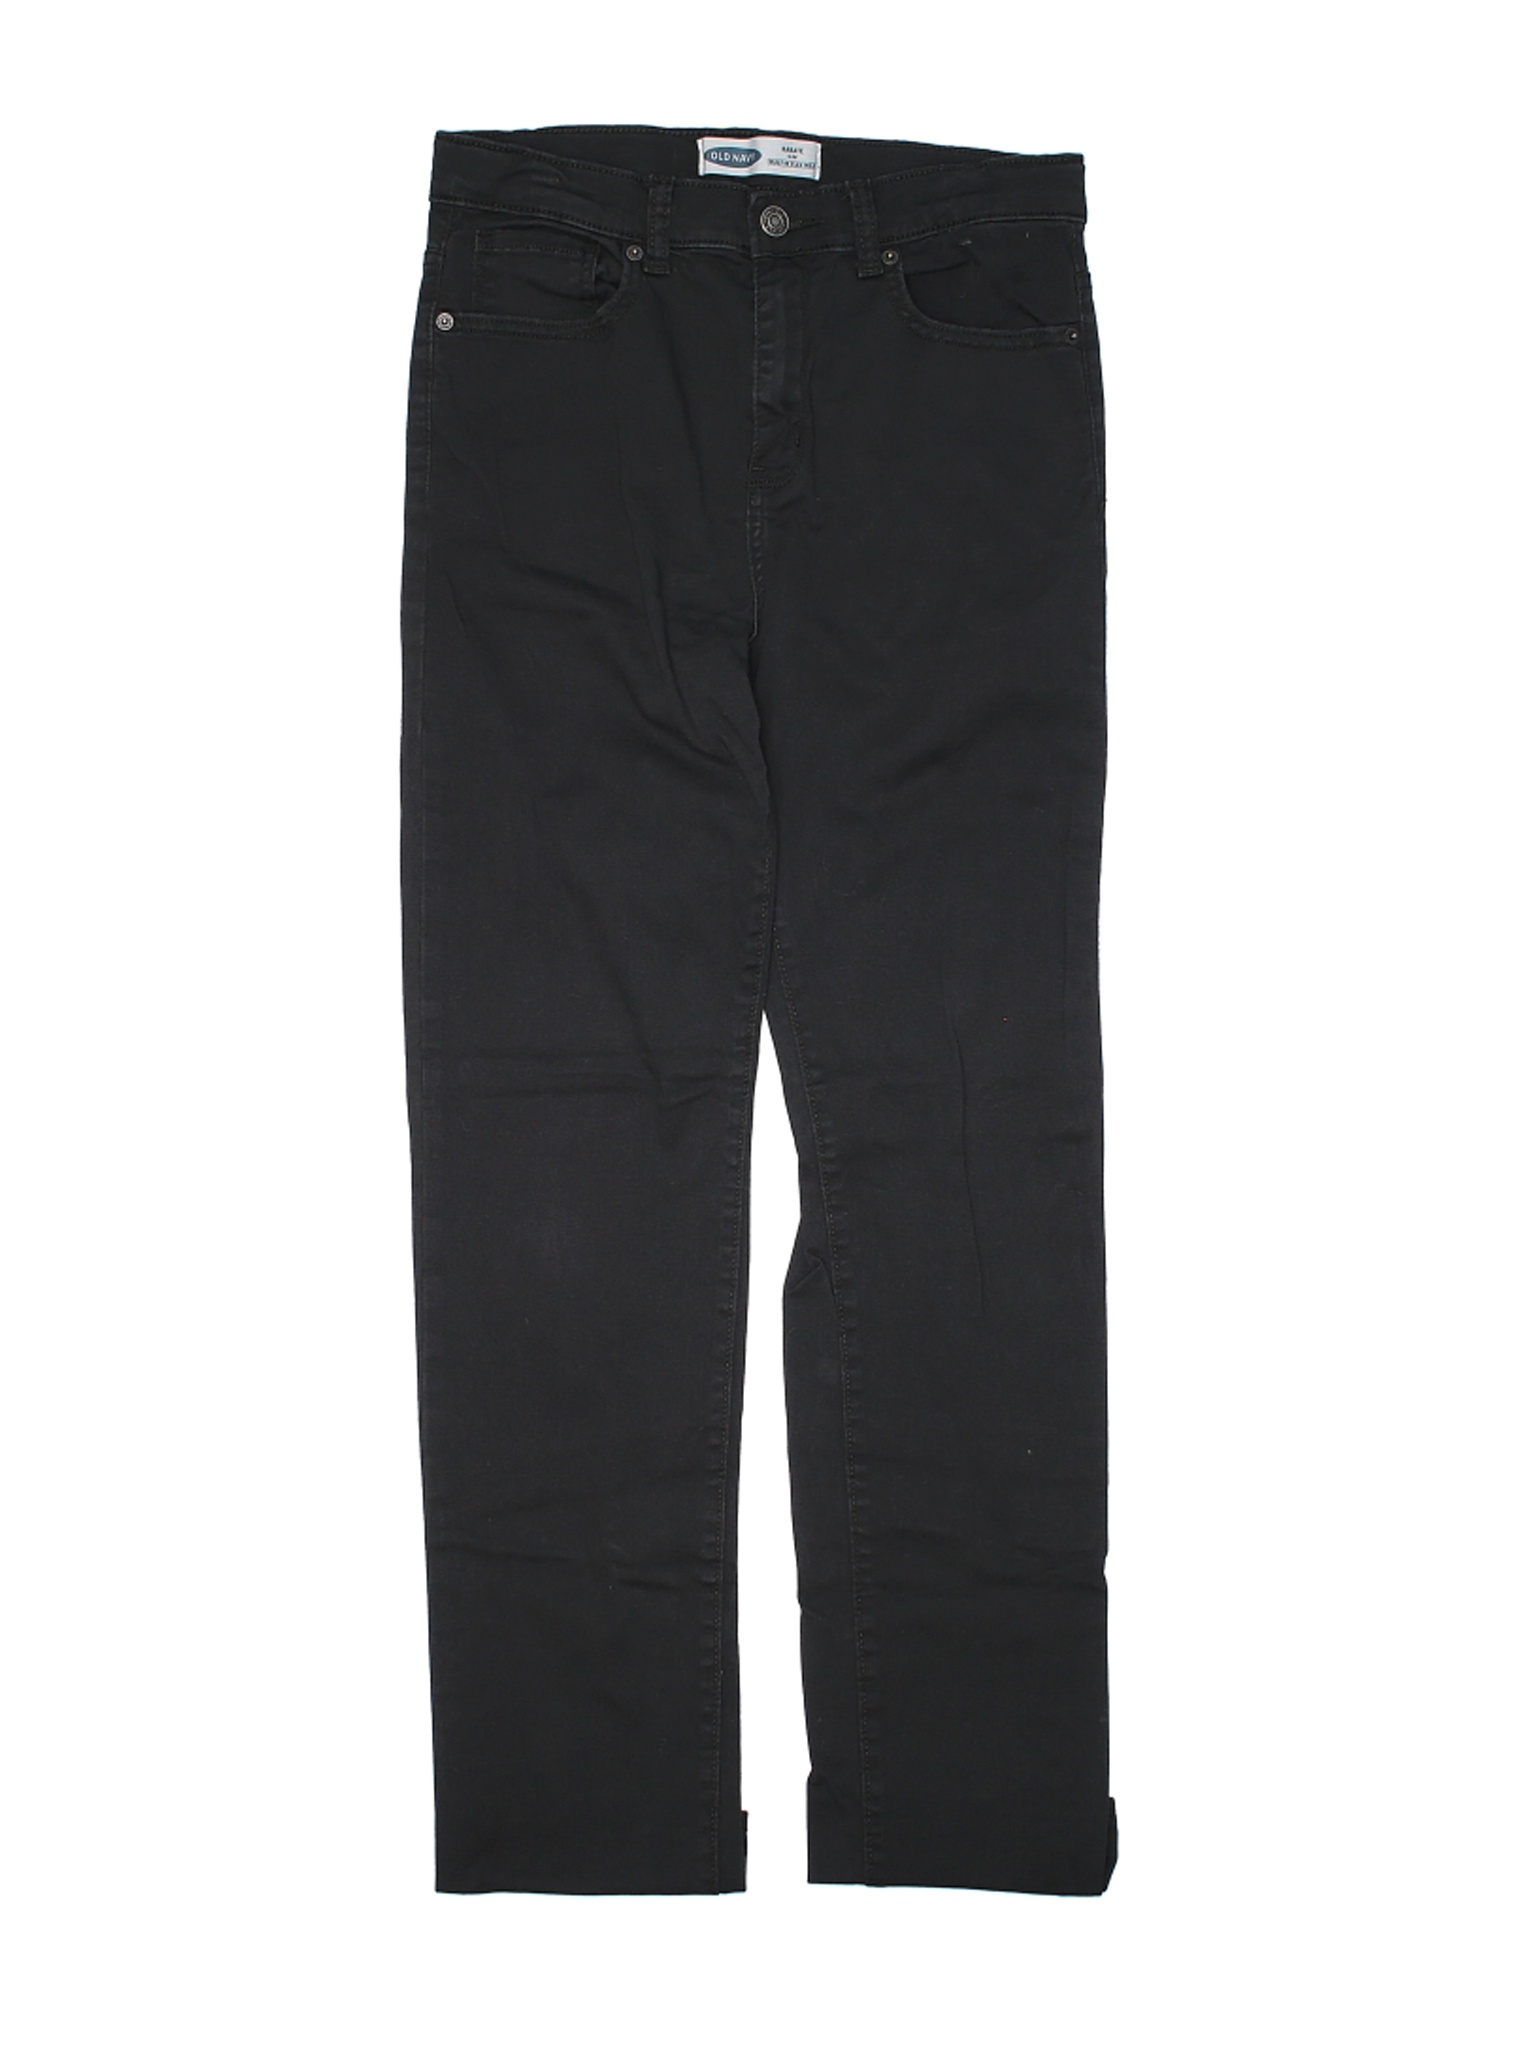 Old Navy Boys Black Jeans 16 | eBay